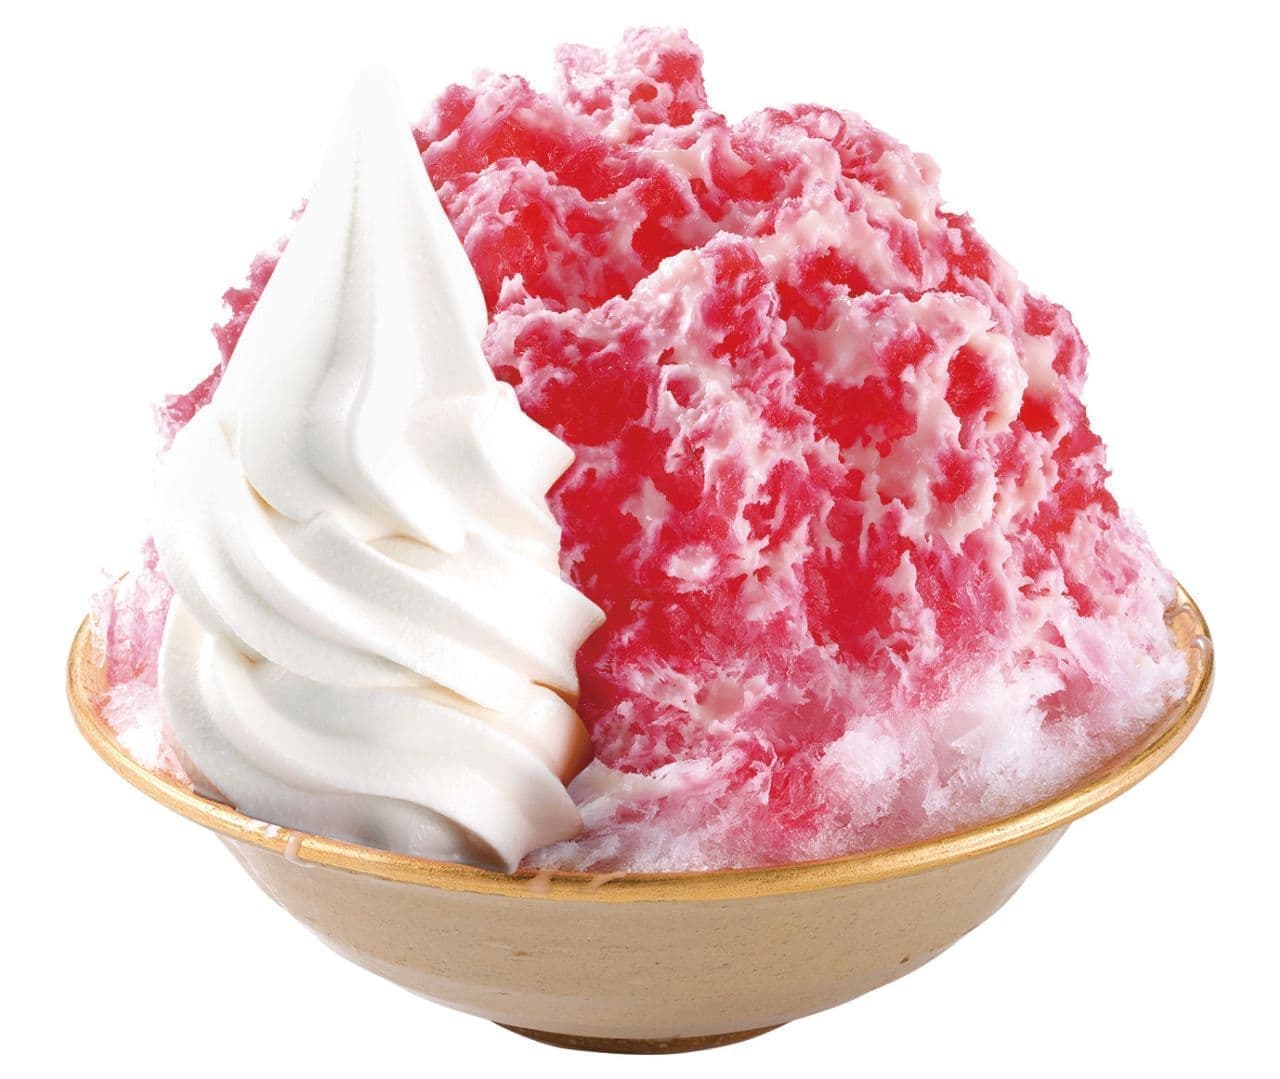 Komeda Coffee Shop Shaved Ice "Strawberry